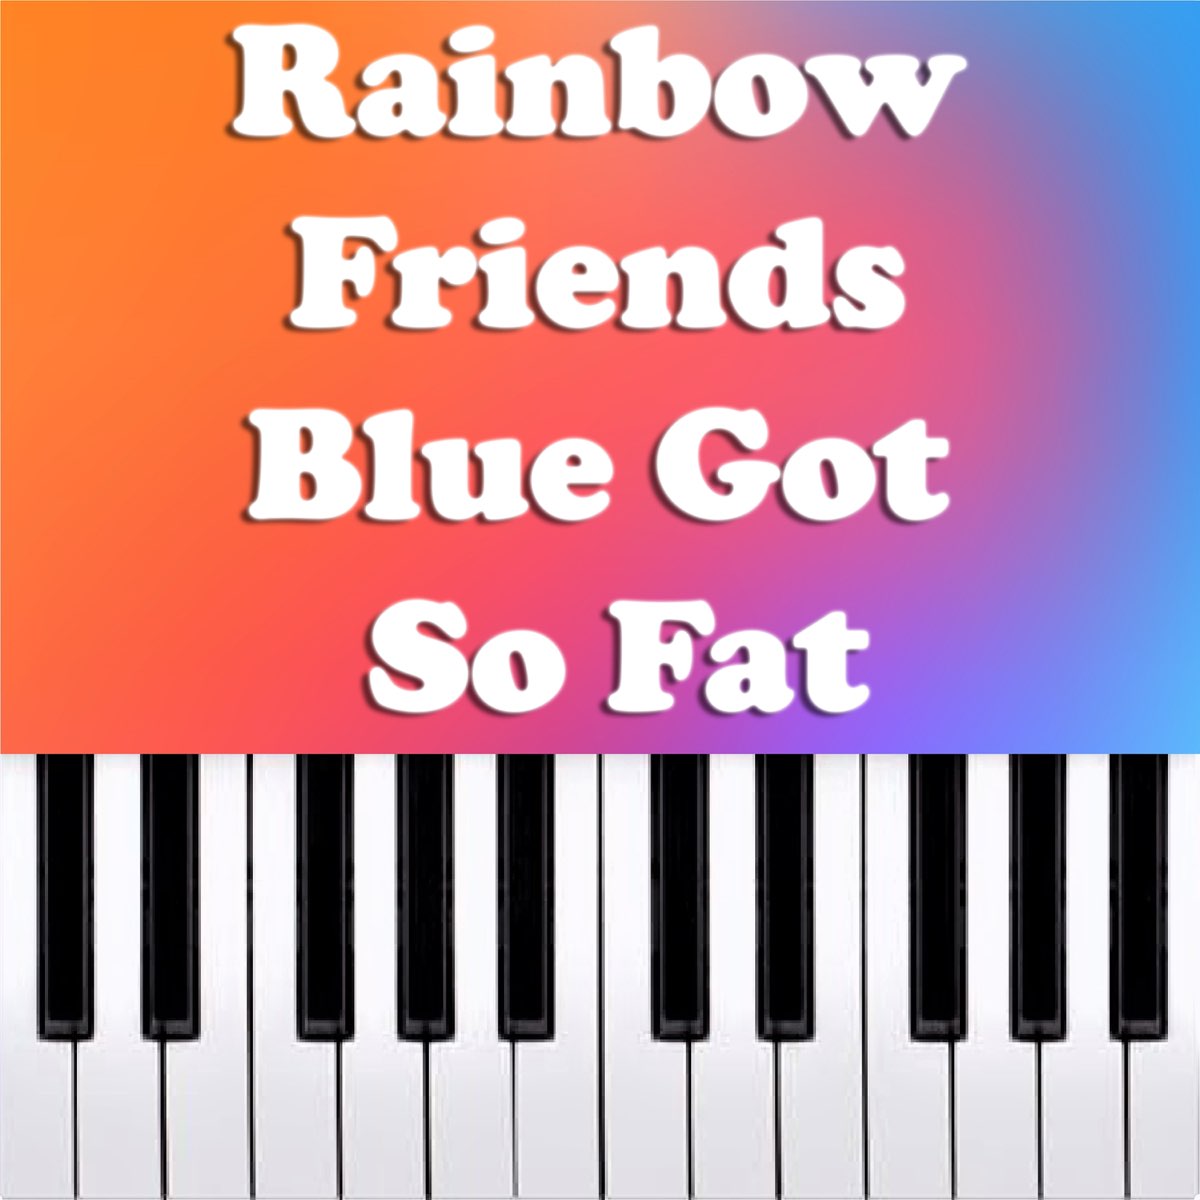 Sad cat dance: Rainbow friends (Piano Version) - Single - Album by Dario  D'Aversa - Apple Music